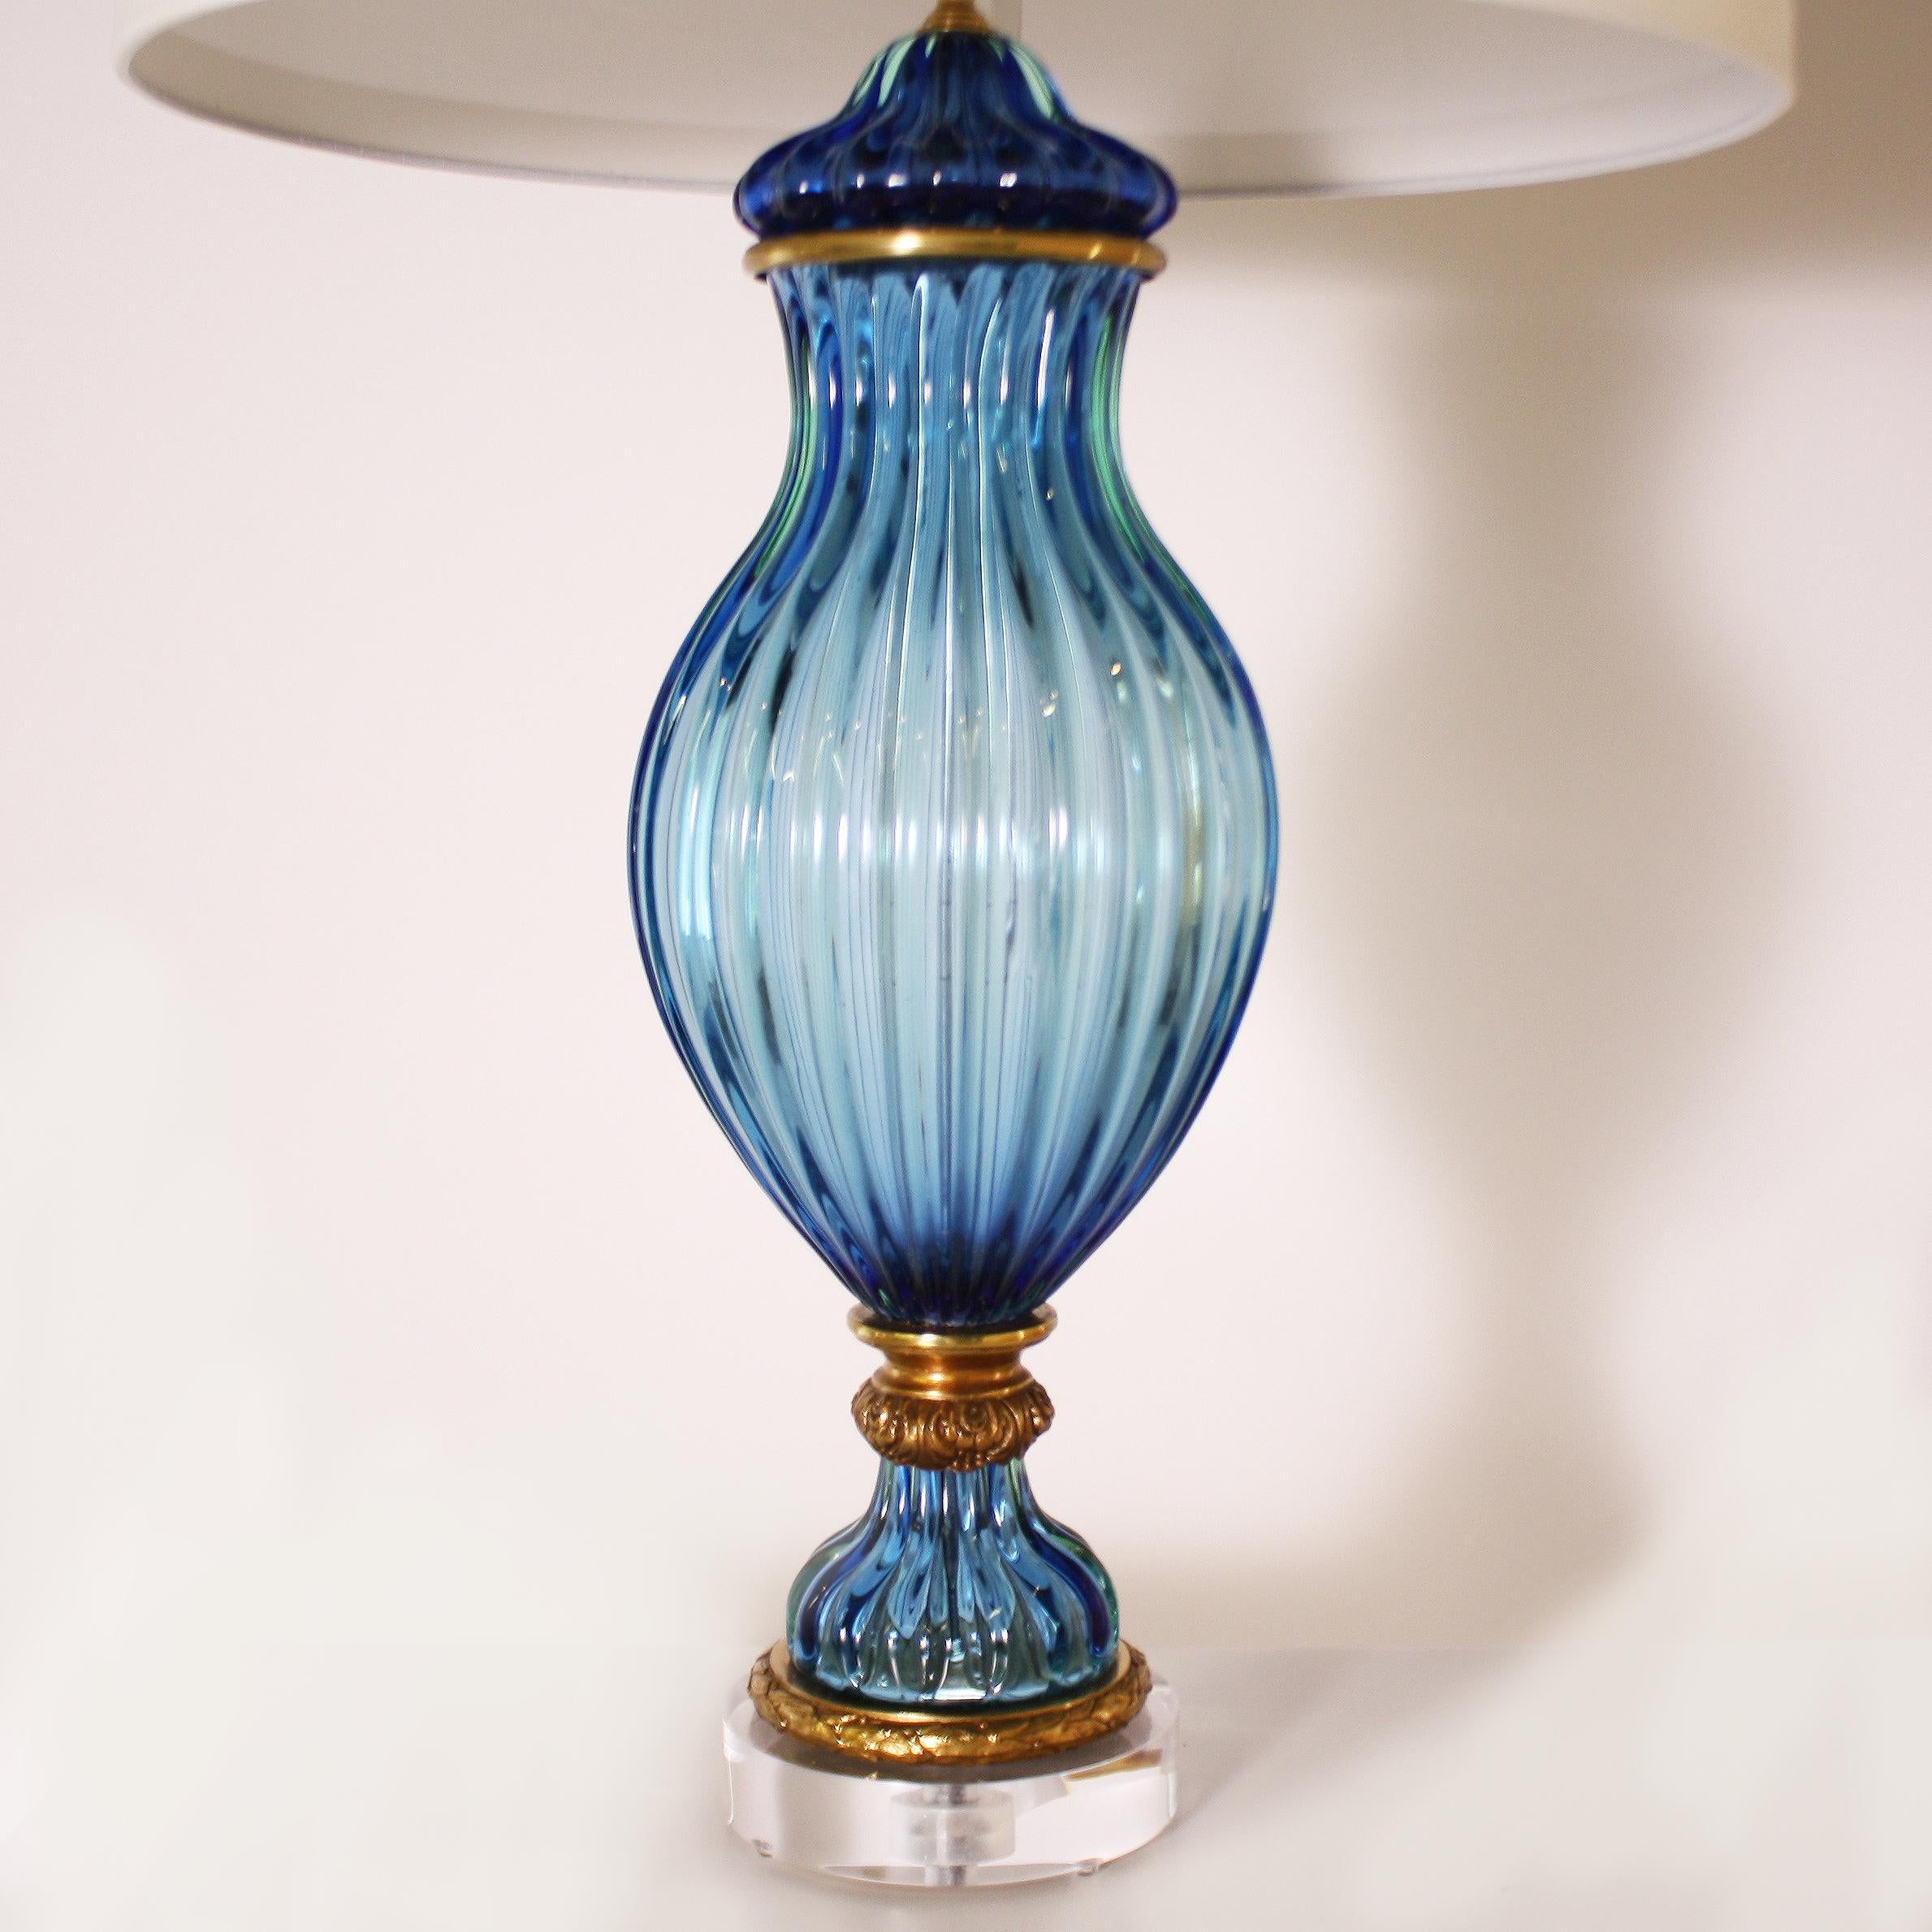 Blue Marbro Italian glass lamp, circa 1950
$5500.